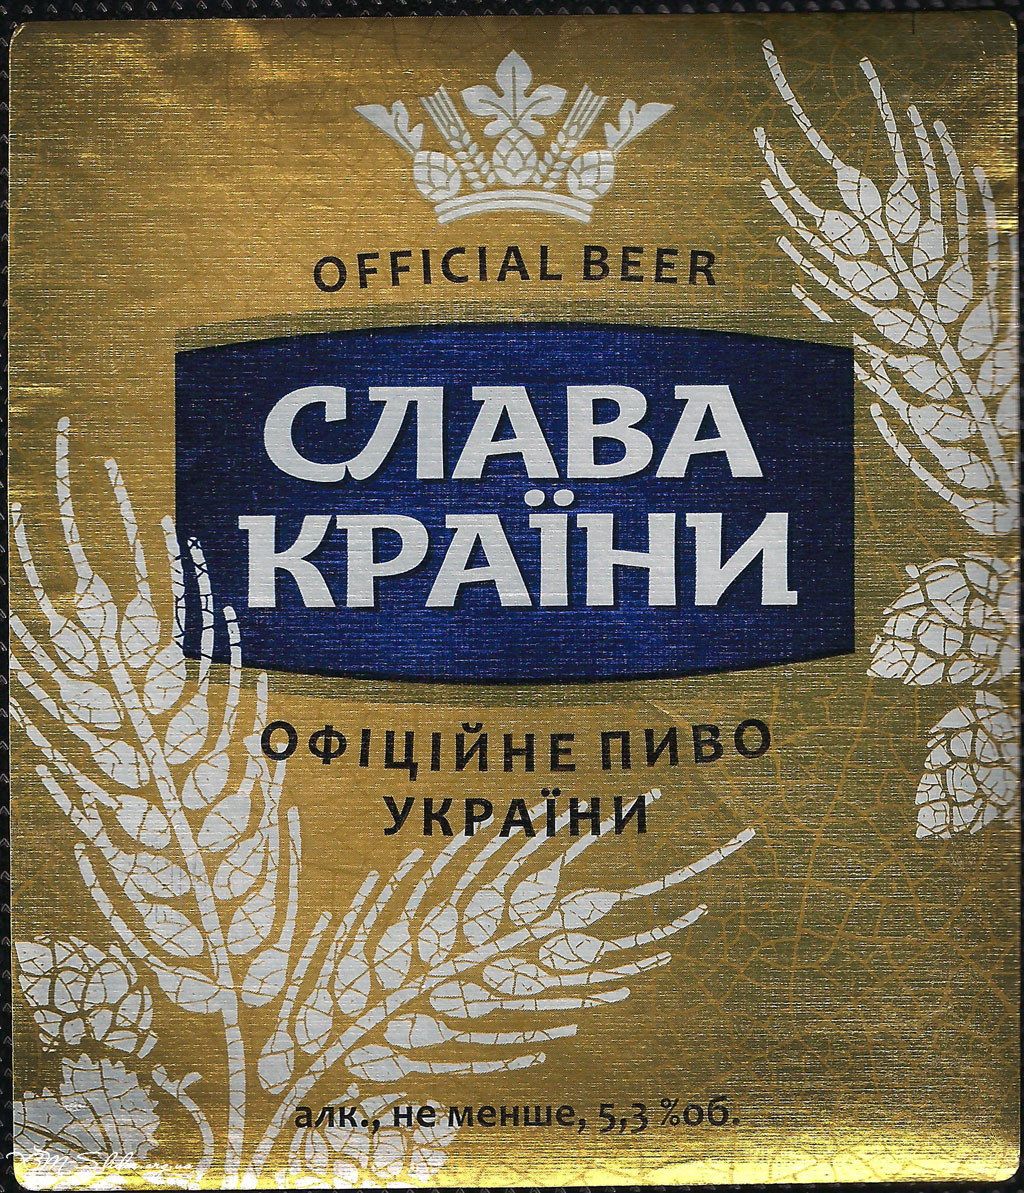 Слава Україні - Офіційне пиво України - Official Beer